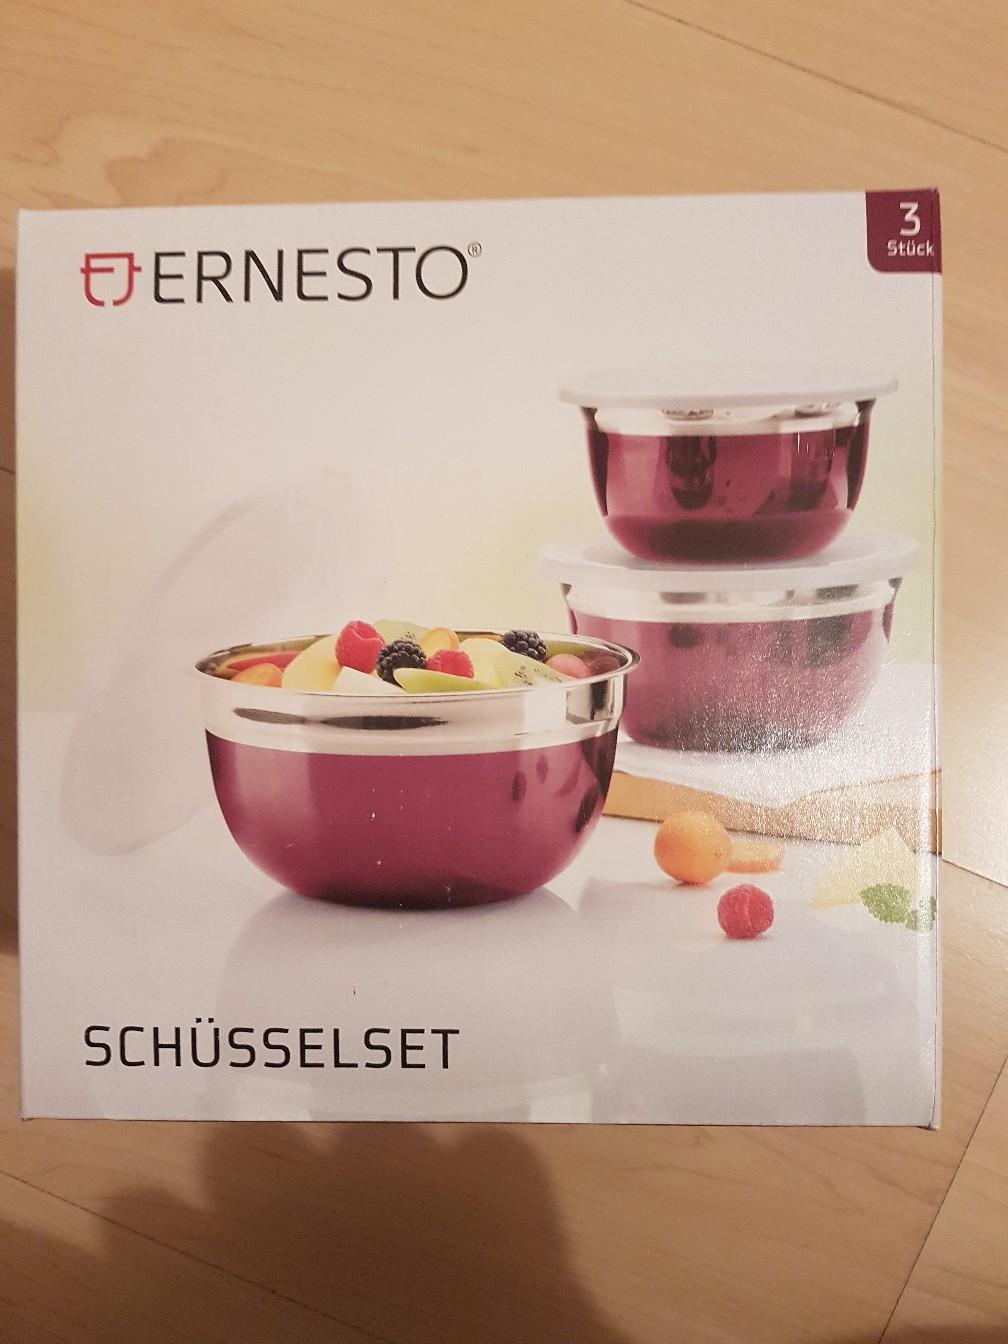 Ernesto Schüssel Set 3 teilig in 76889 Birkenhördt for €8.00 for sale |  Shpock | Küchenhelfer